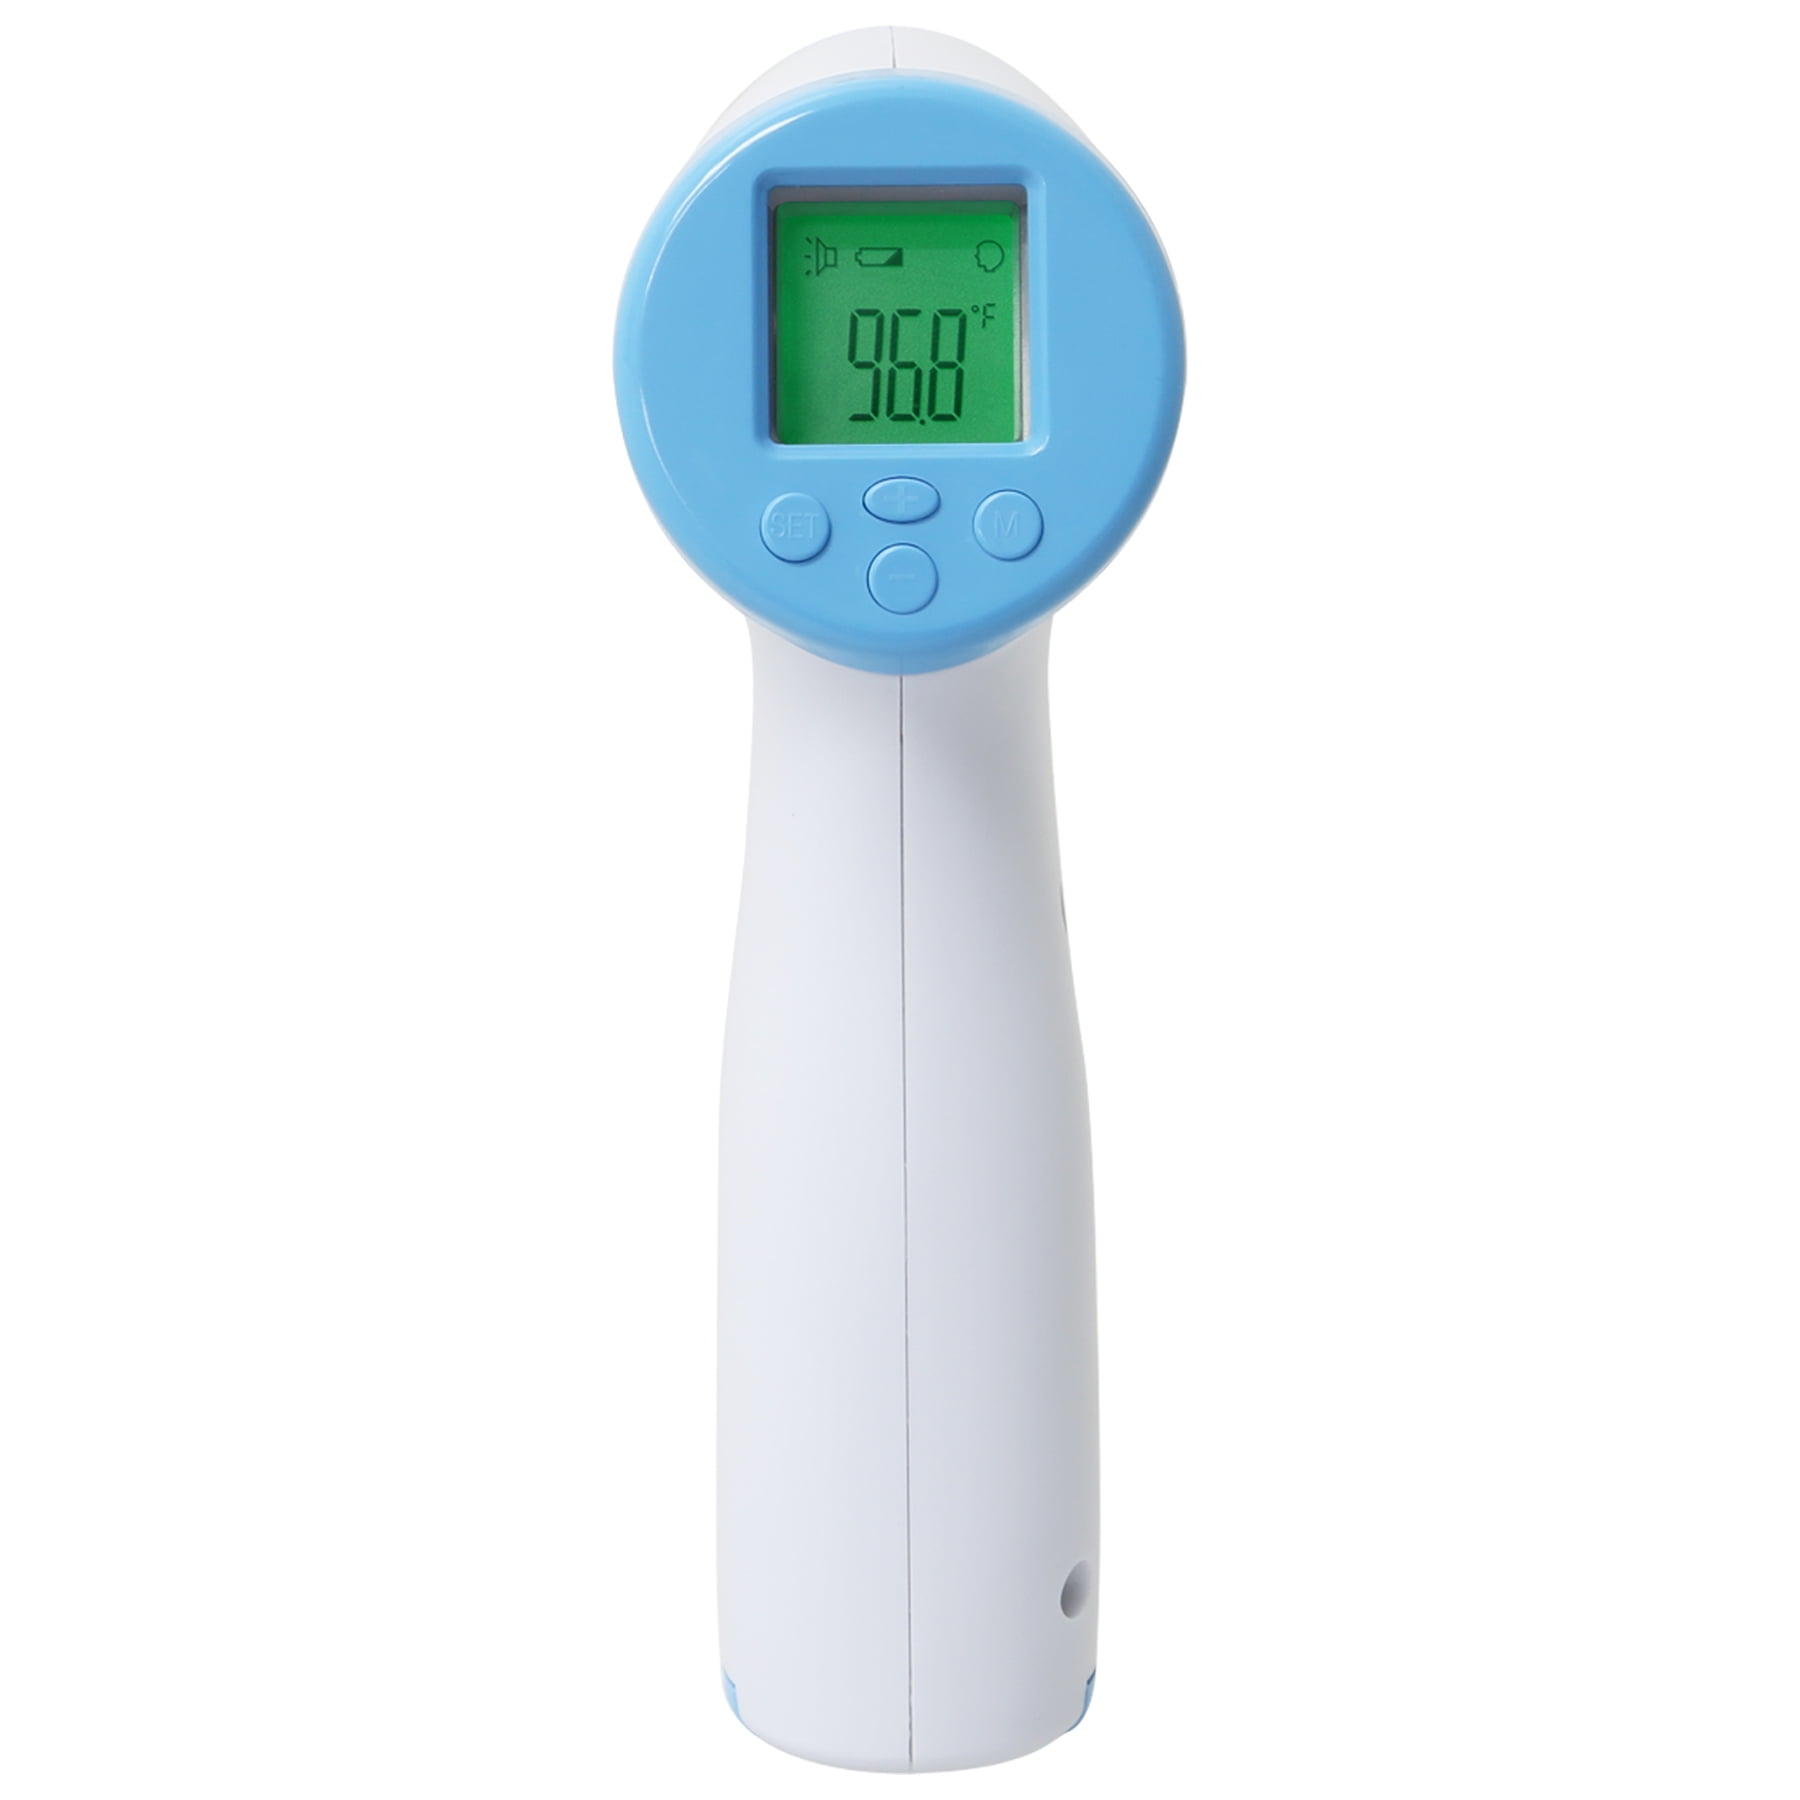  Digital Infrared Thermometer,INFURIDER YF-981B Non